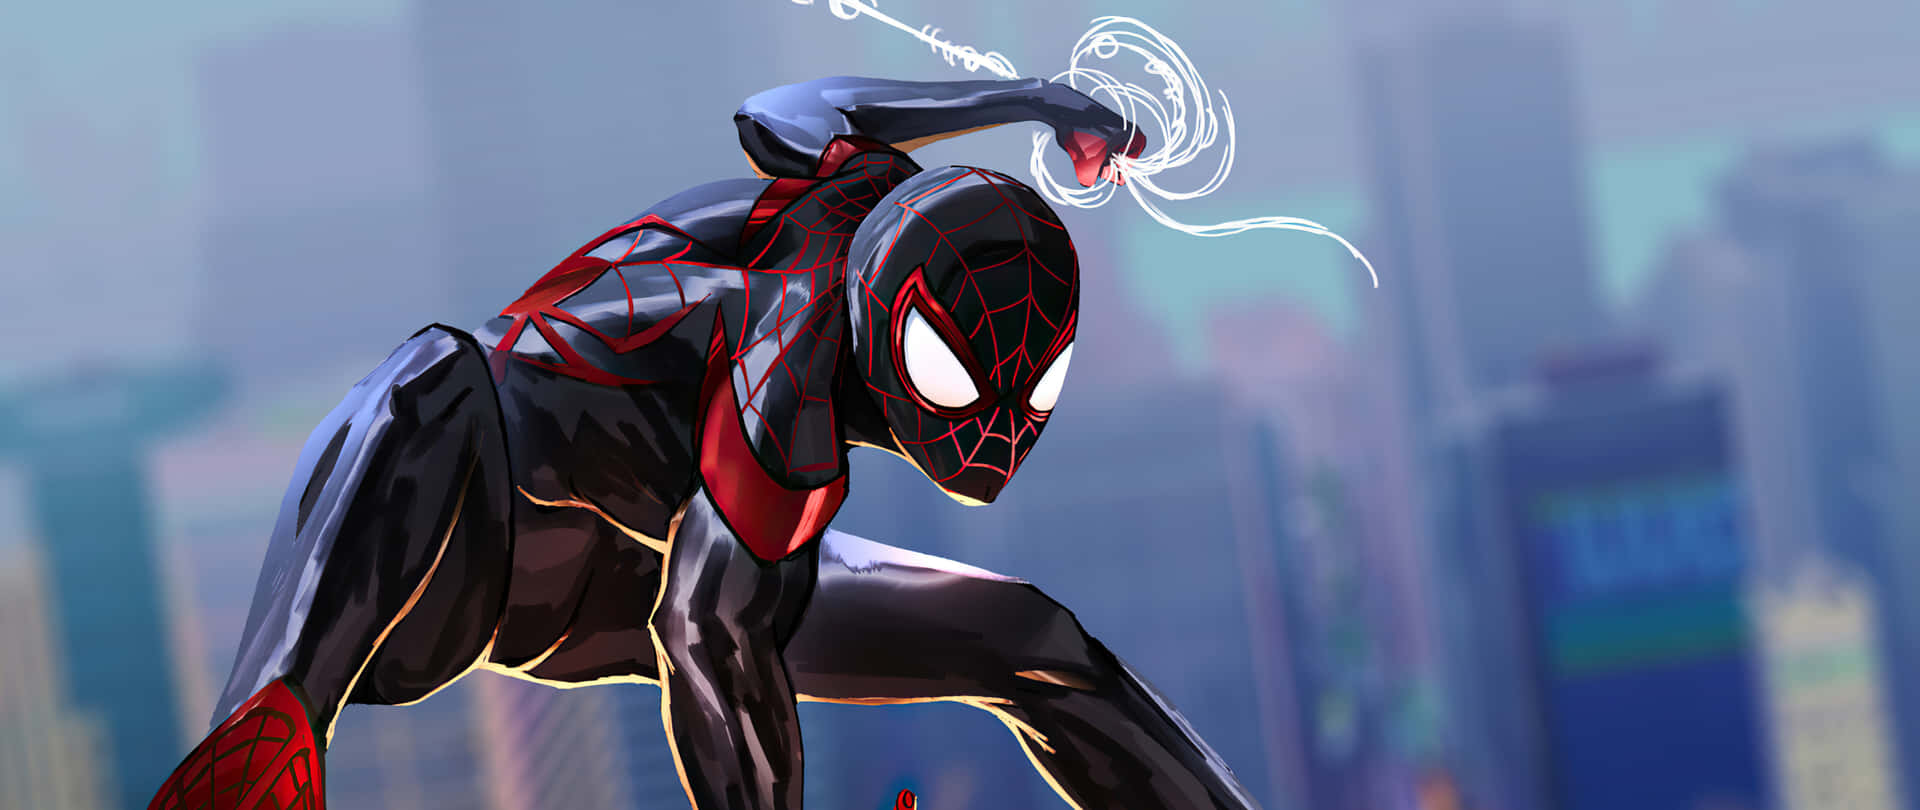 Miles Morales Spider-man Art 2560x1080 Wallpaper